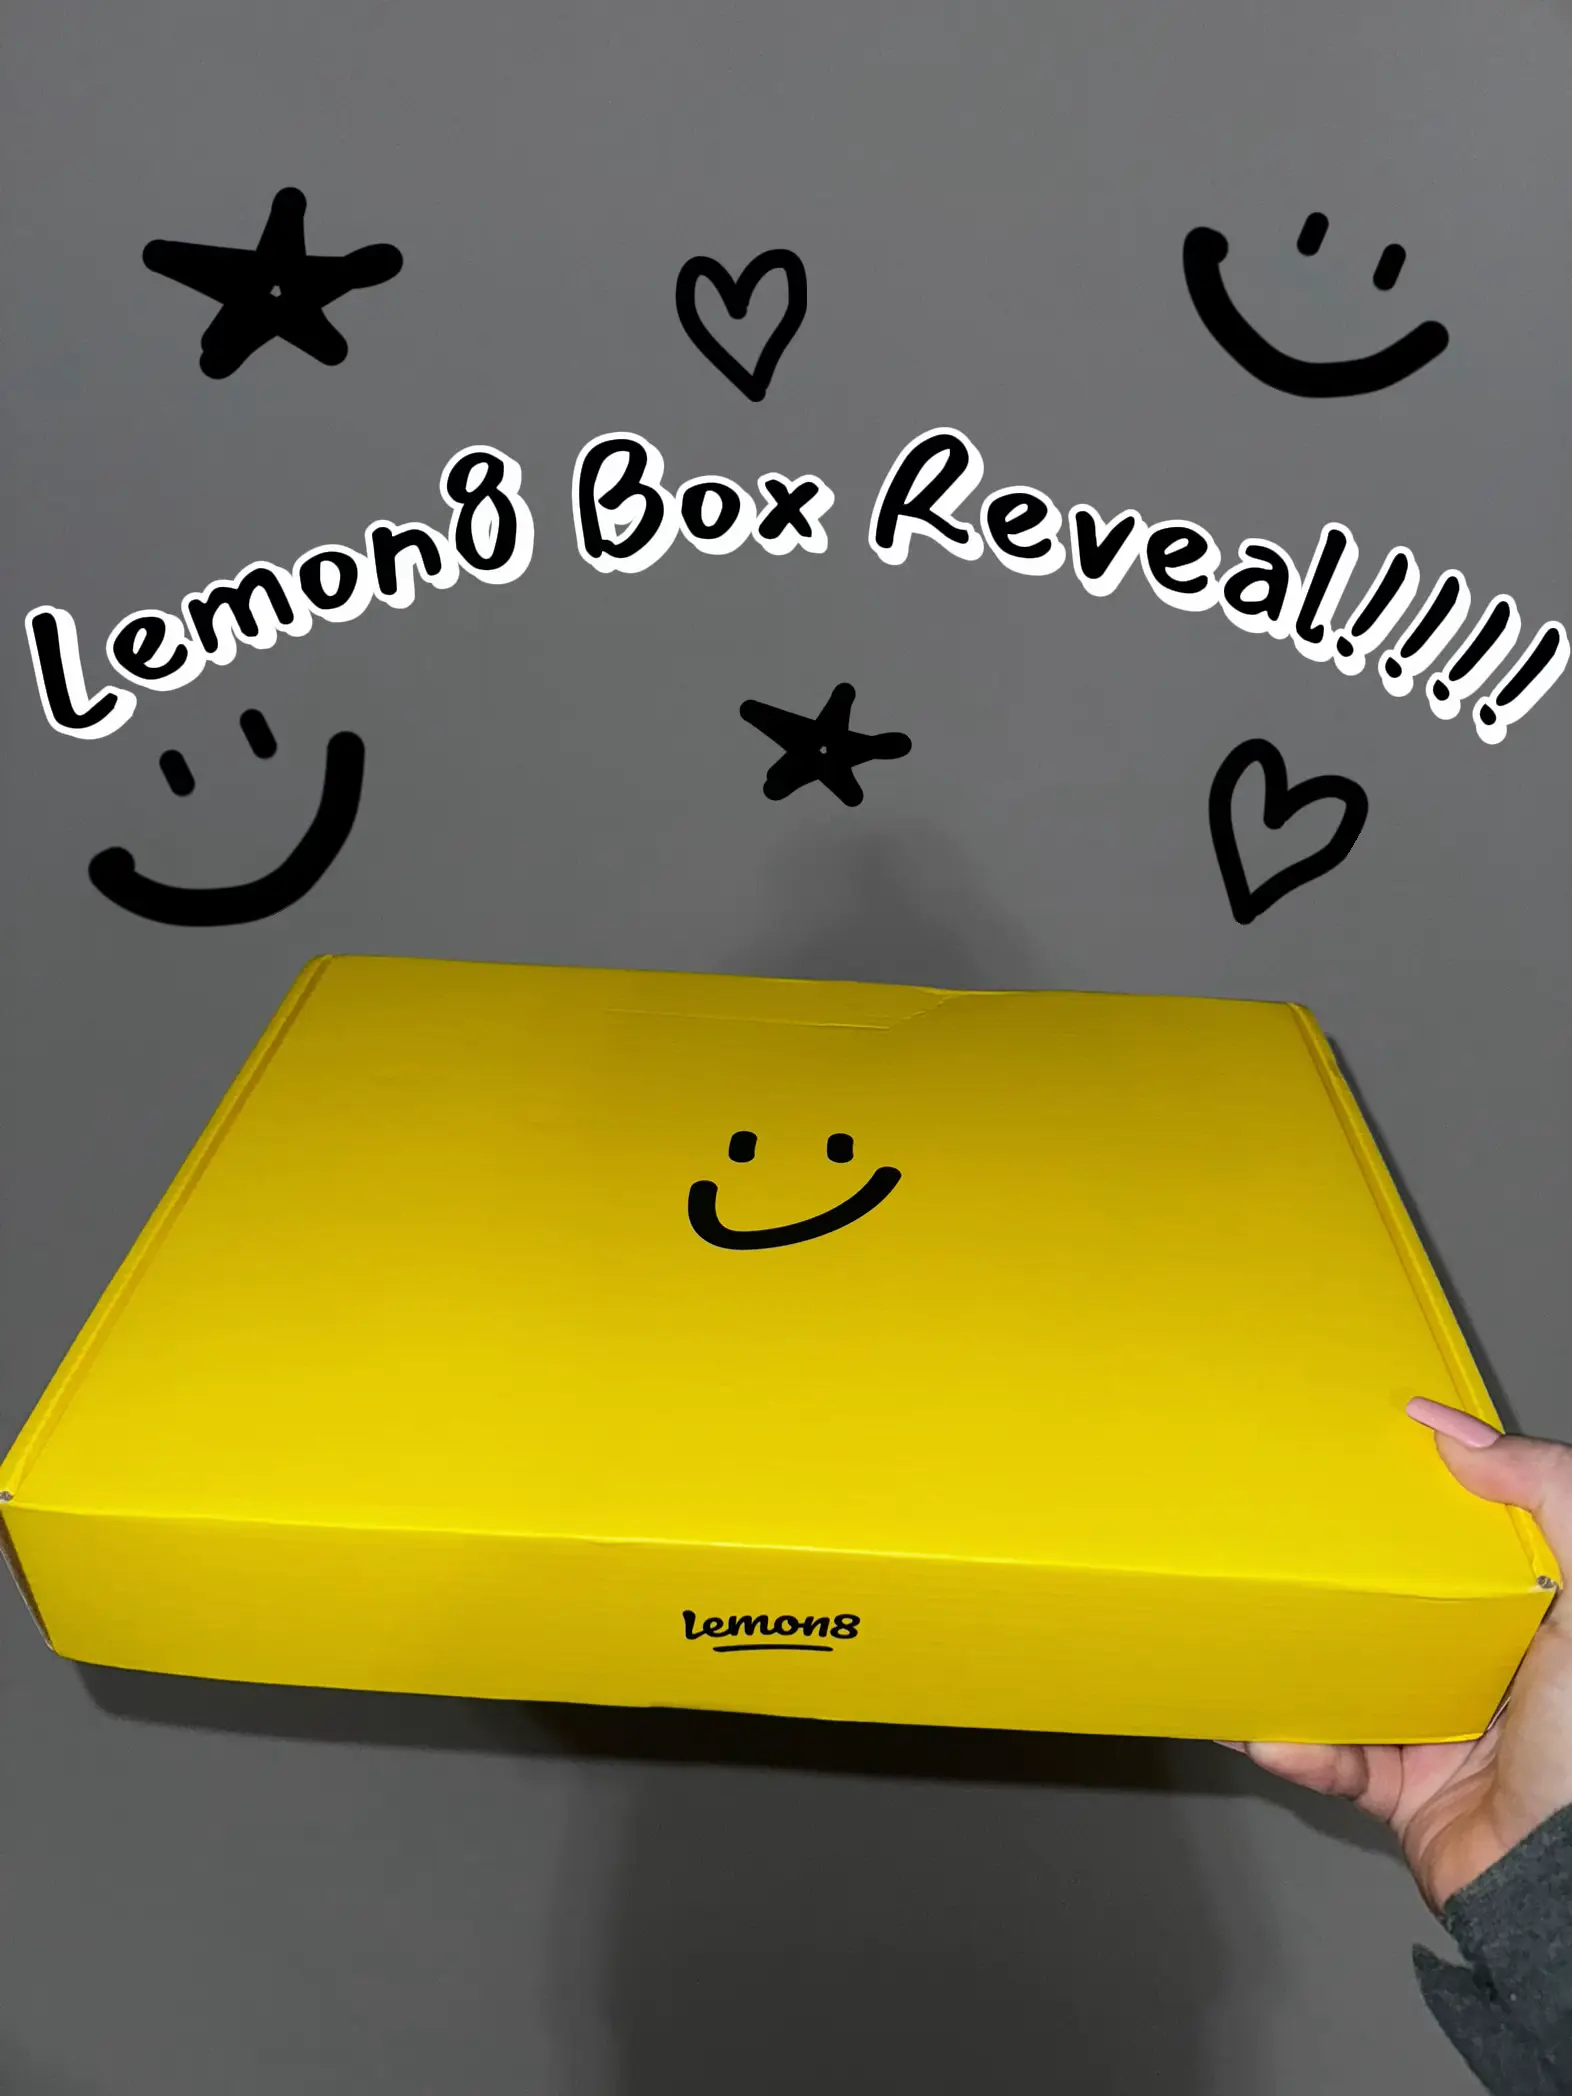 Lemon8 Box Reveal + Product Review 's images